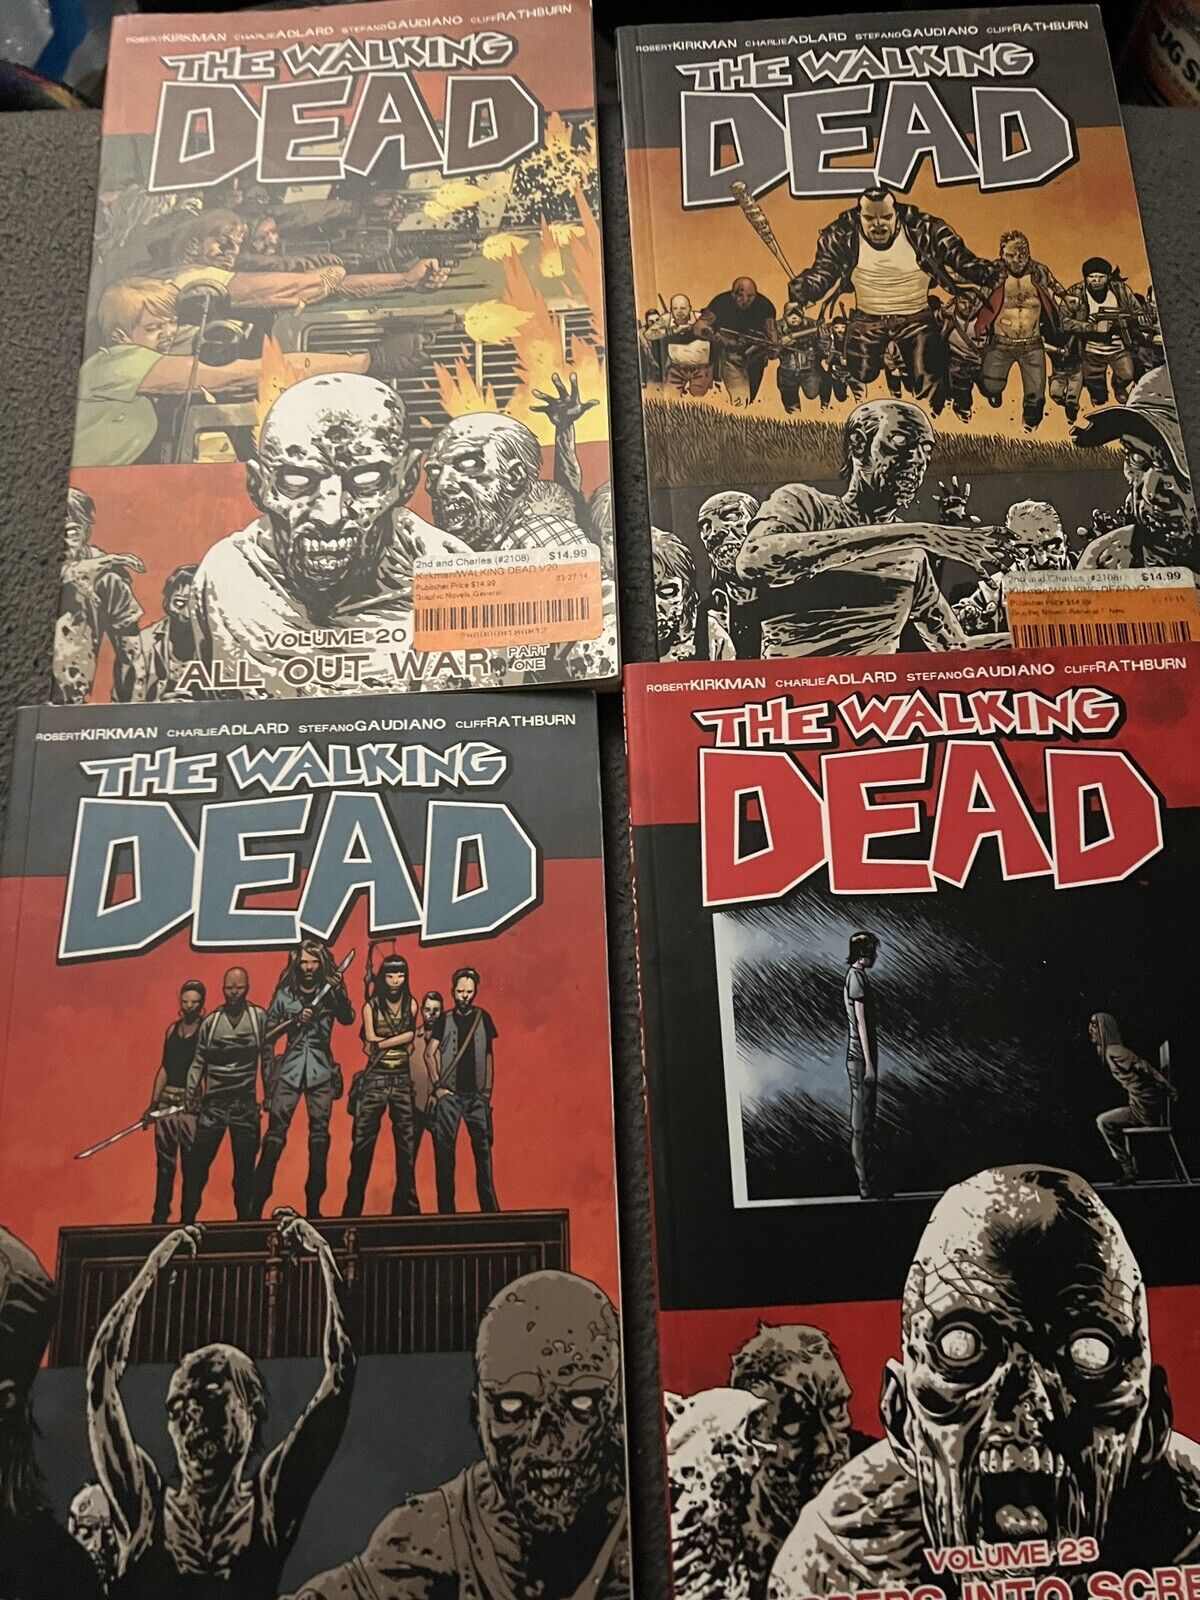 The Walking Dead Vol 20, 21, 22, 23 TP by Robert Kirkman COMIC LOT